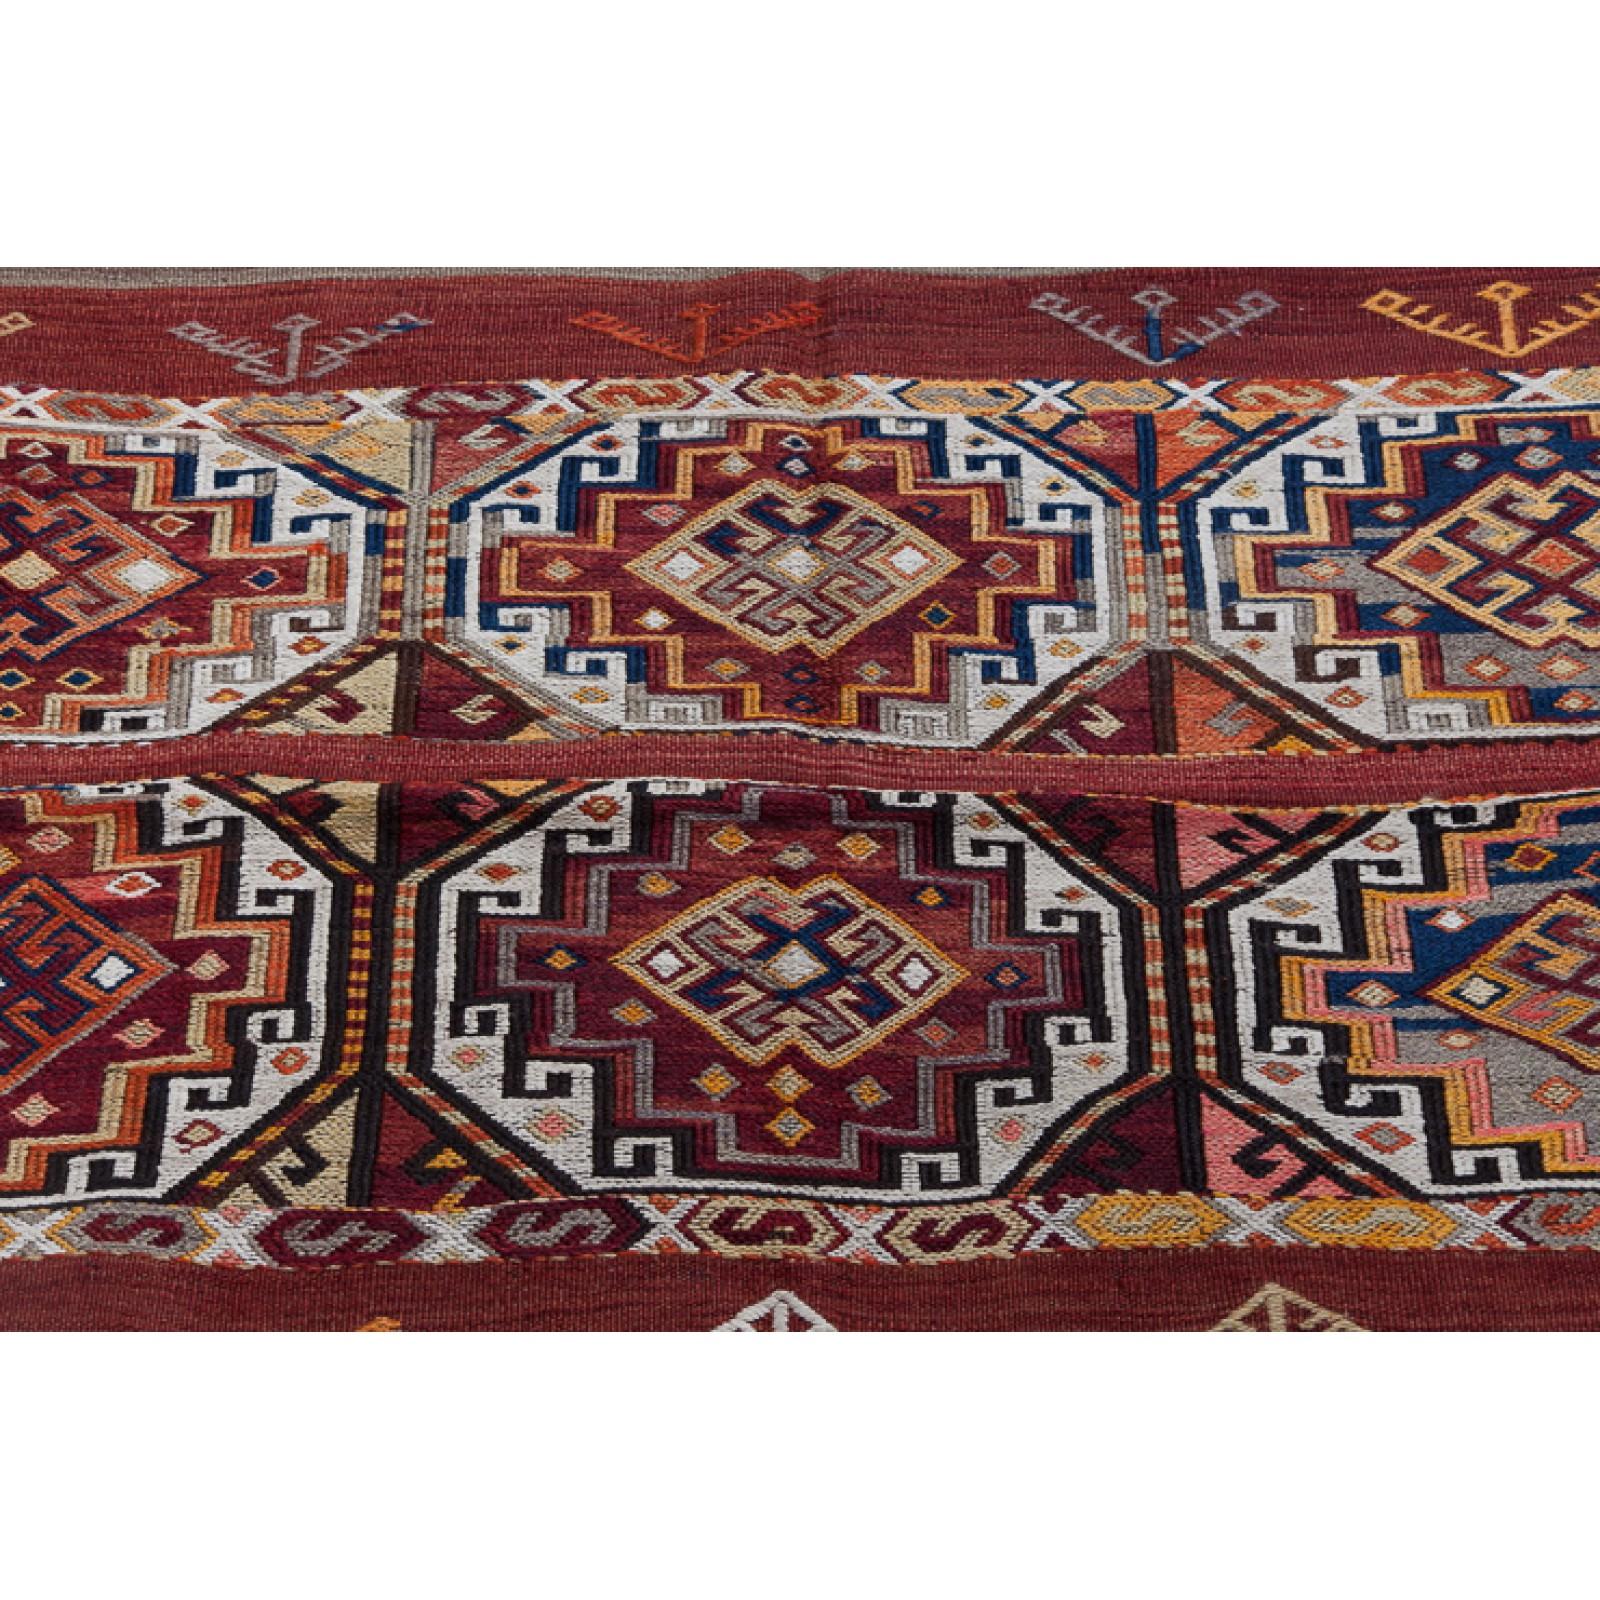 20th Century Vintage Malatya Kilim Cuval Rug Wool Goat Hair Chuval Anatolian Turkish Carpet For Sale